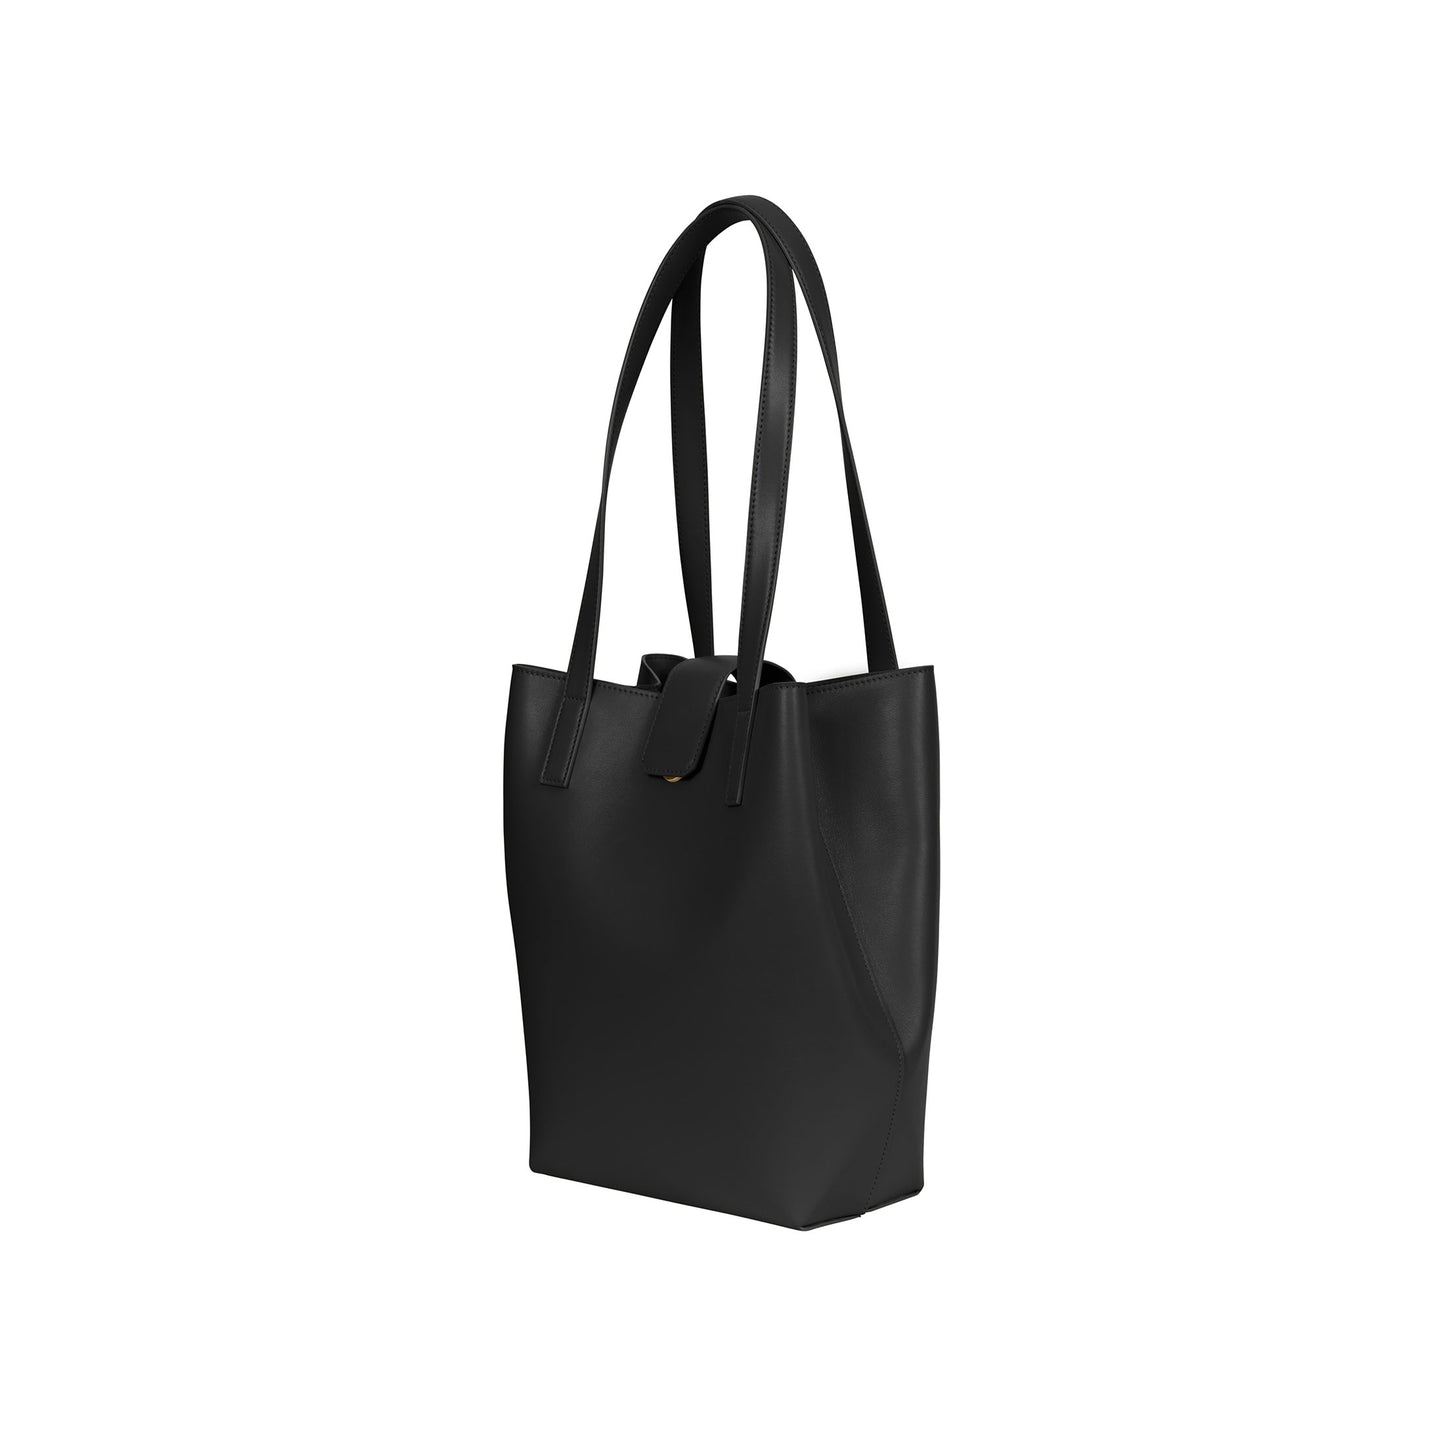 Minimalist Style Handbag by Chandra Keyser. La Borsa Tote Bag.